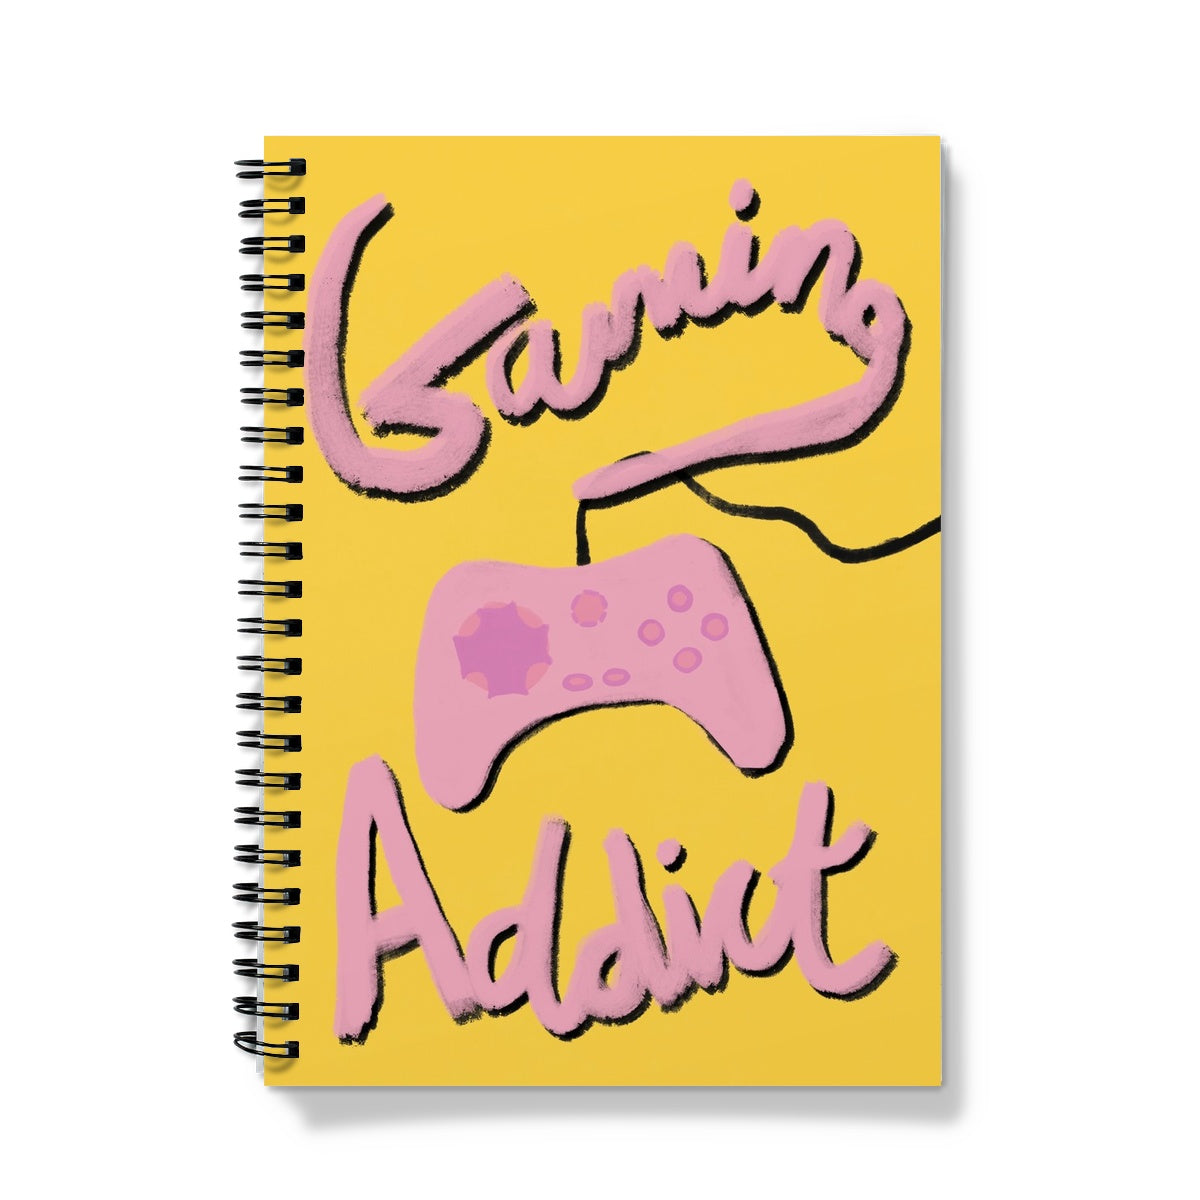 Gaming Addict Print - Yellow, Pink Notebook